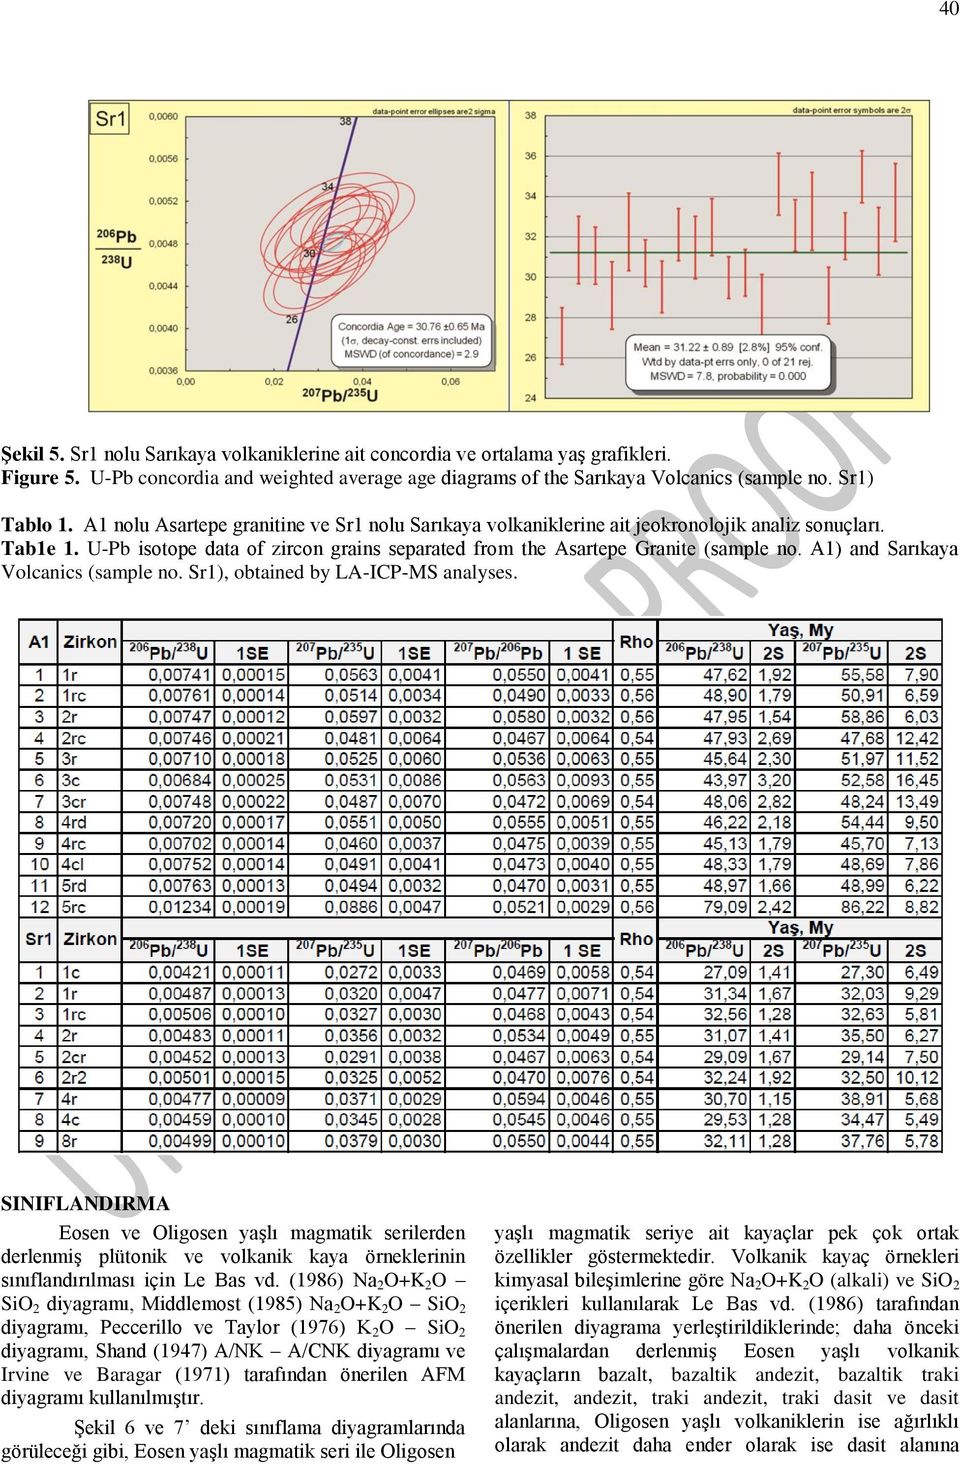 A1) and Sarıkaya Volcanics (sample no. Sr1), obtained by LA-ICP-MS analyses.